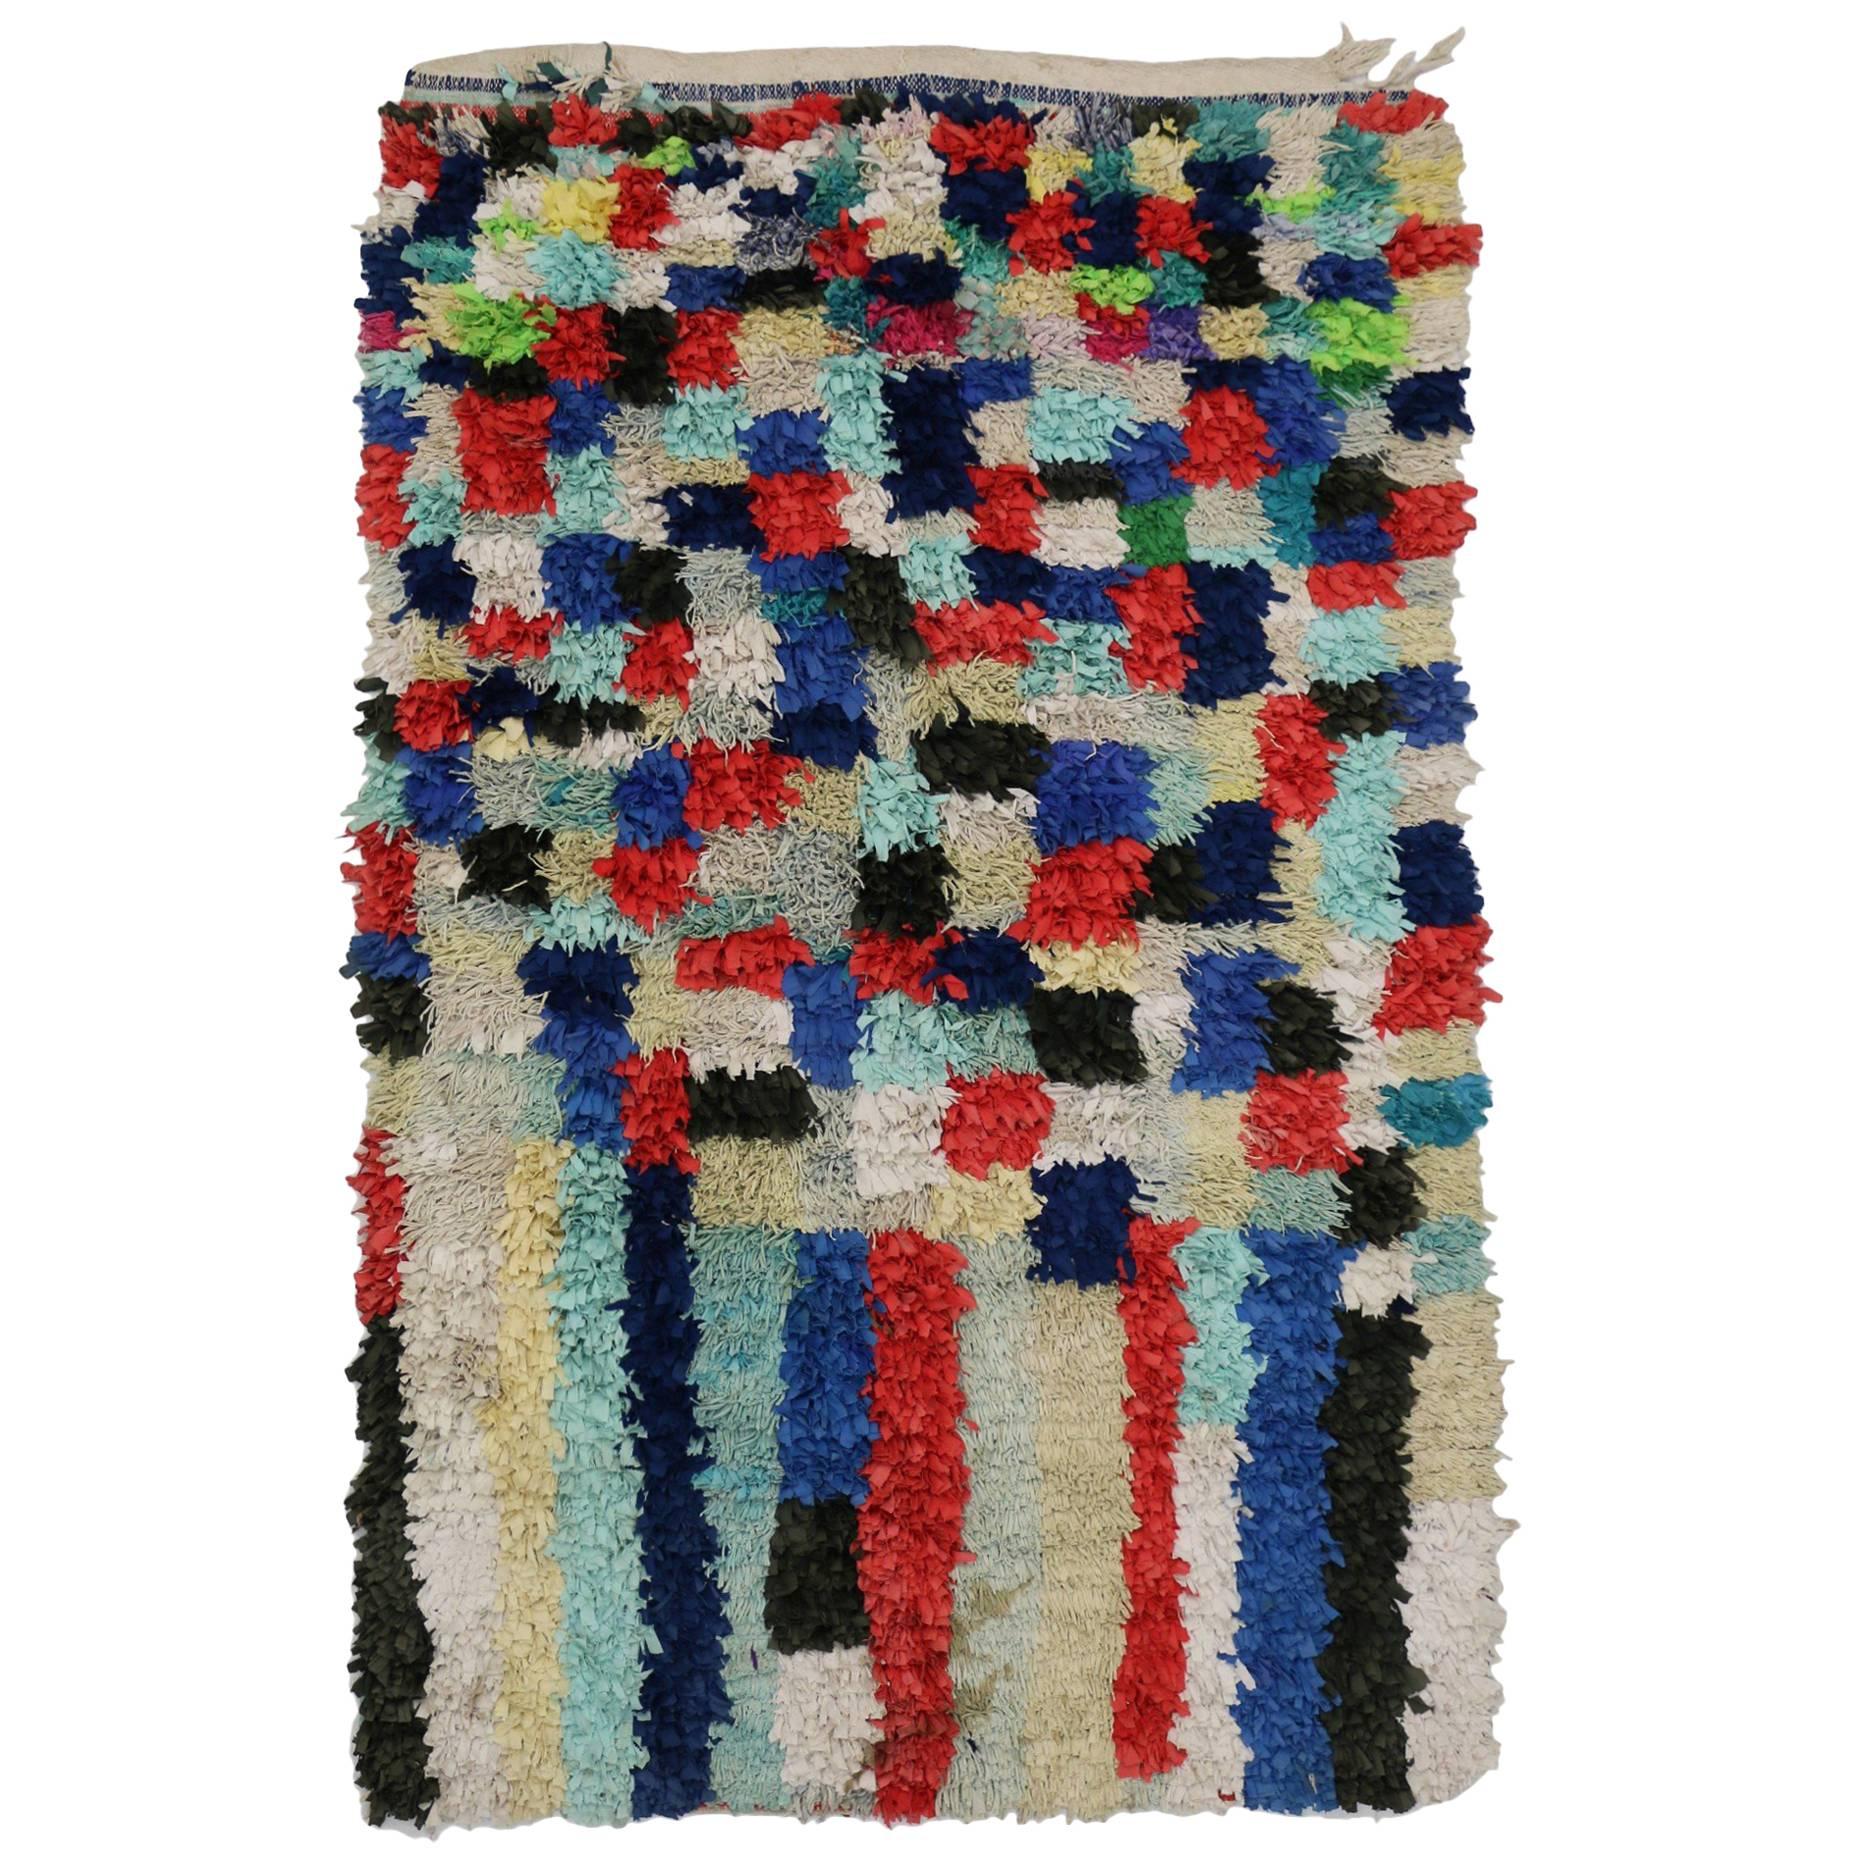 Vintage Berber Moroccan Boucherouite Rug with Postmodern Bauhaus Cubism Style